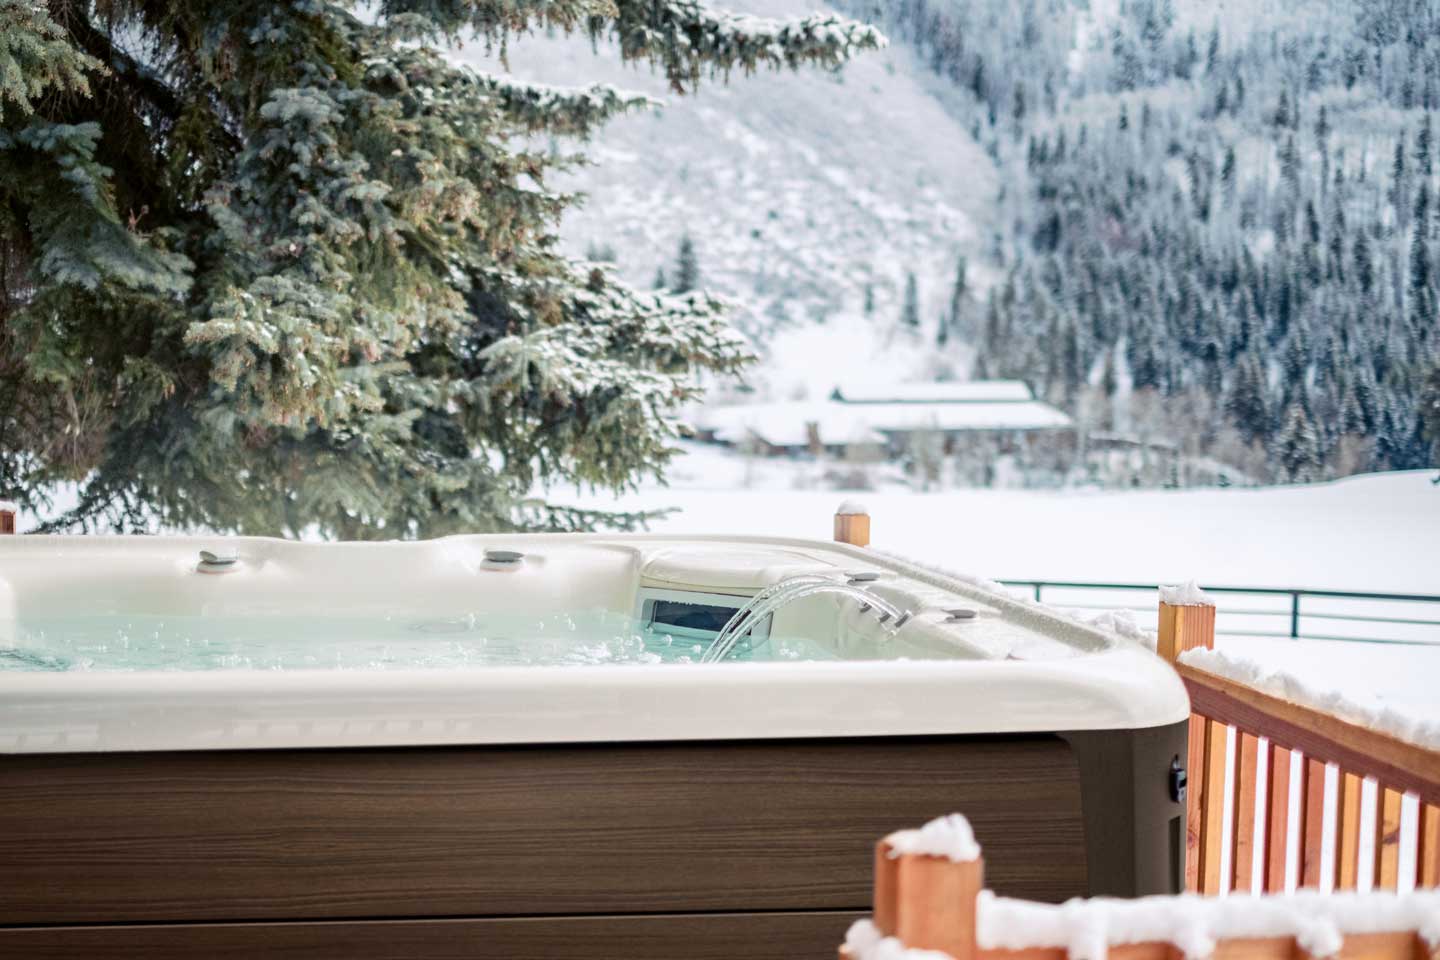 Outdoor Alpine White Walnut Highlife Envoy Hottub with winter scene in background